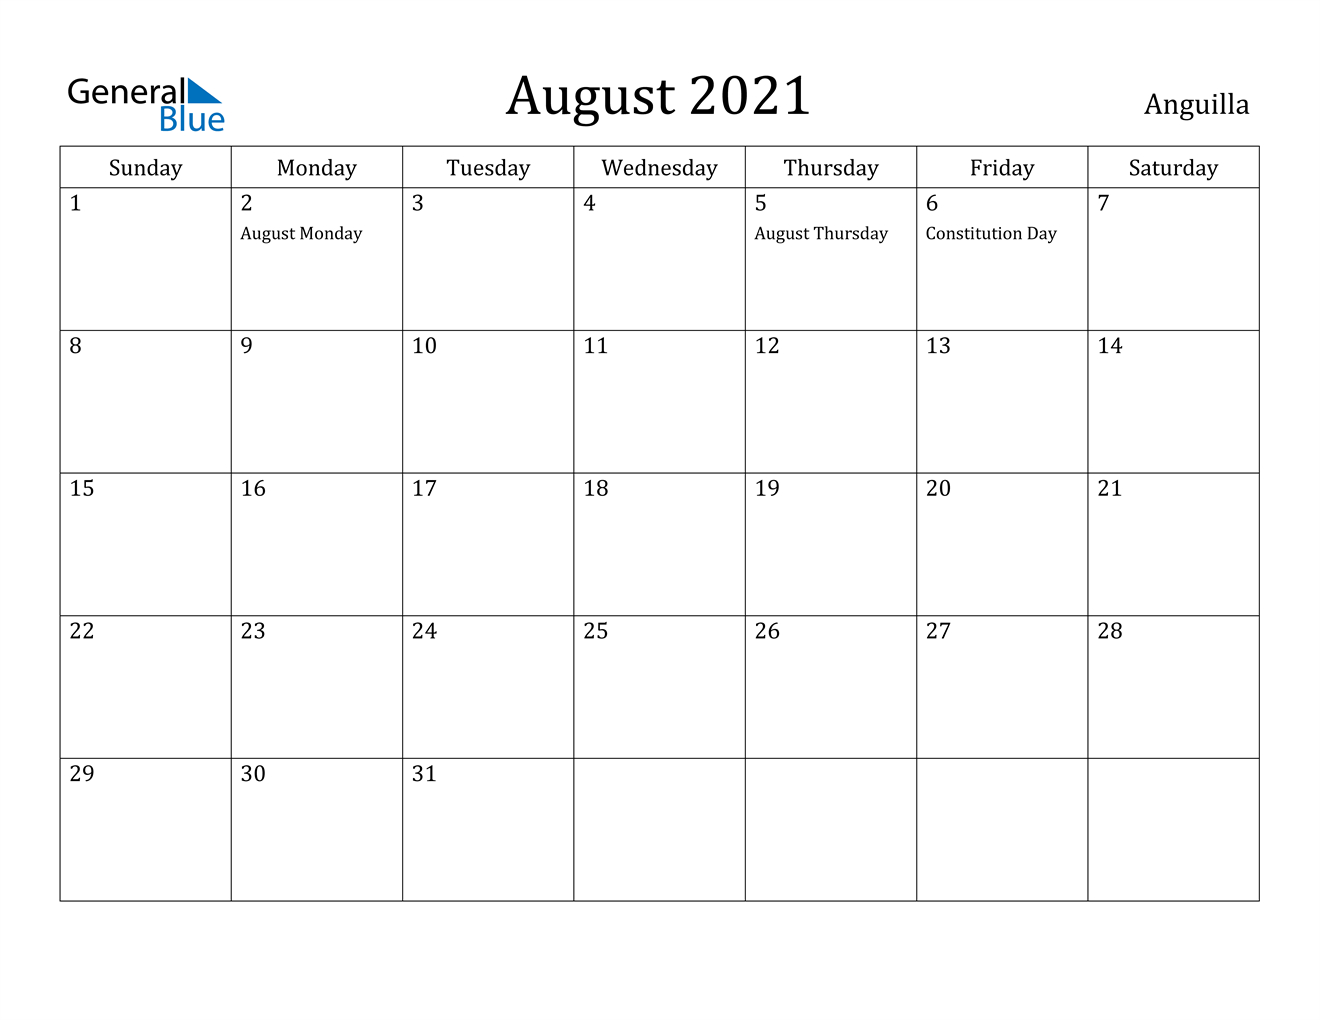 August 2021 Calendar - Anguilla